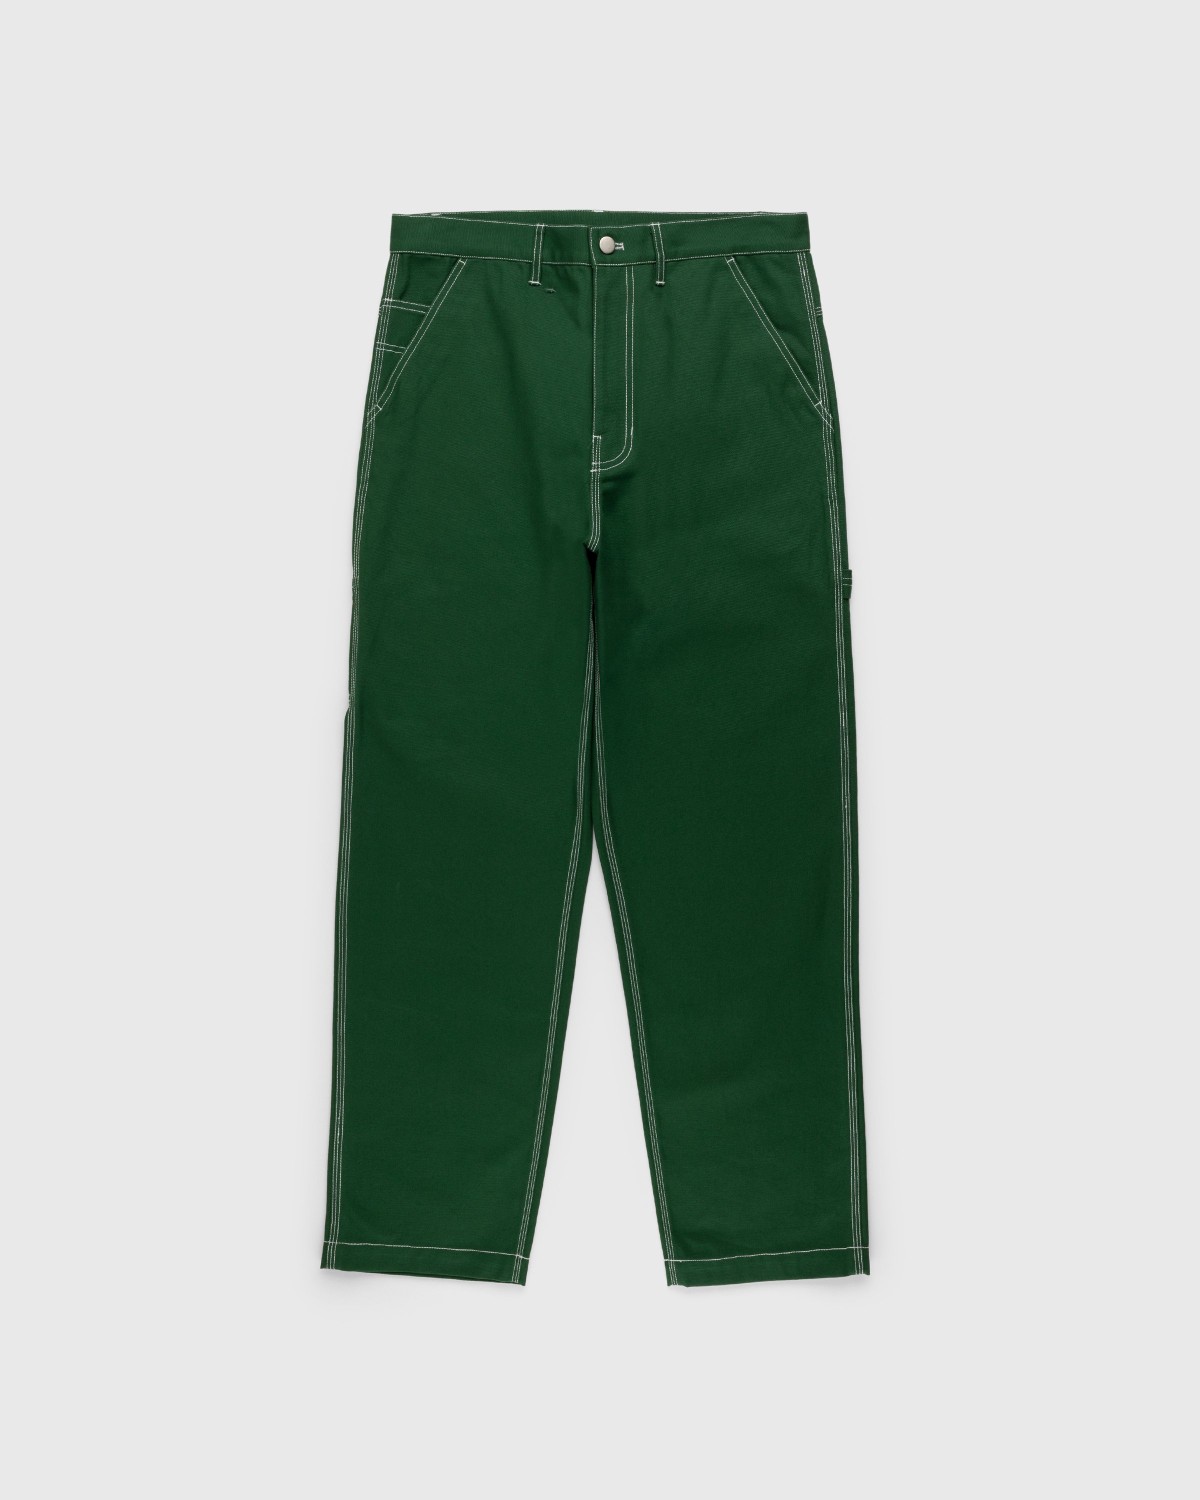 RUF x Highsnobiety – Cotton Work Pants Green | Highsnobiety Shop